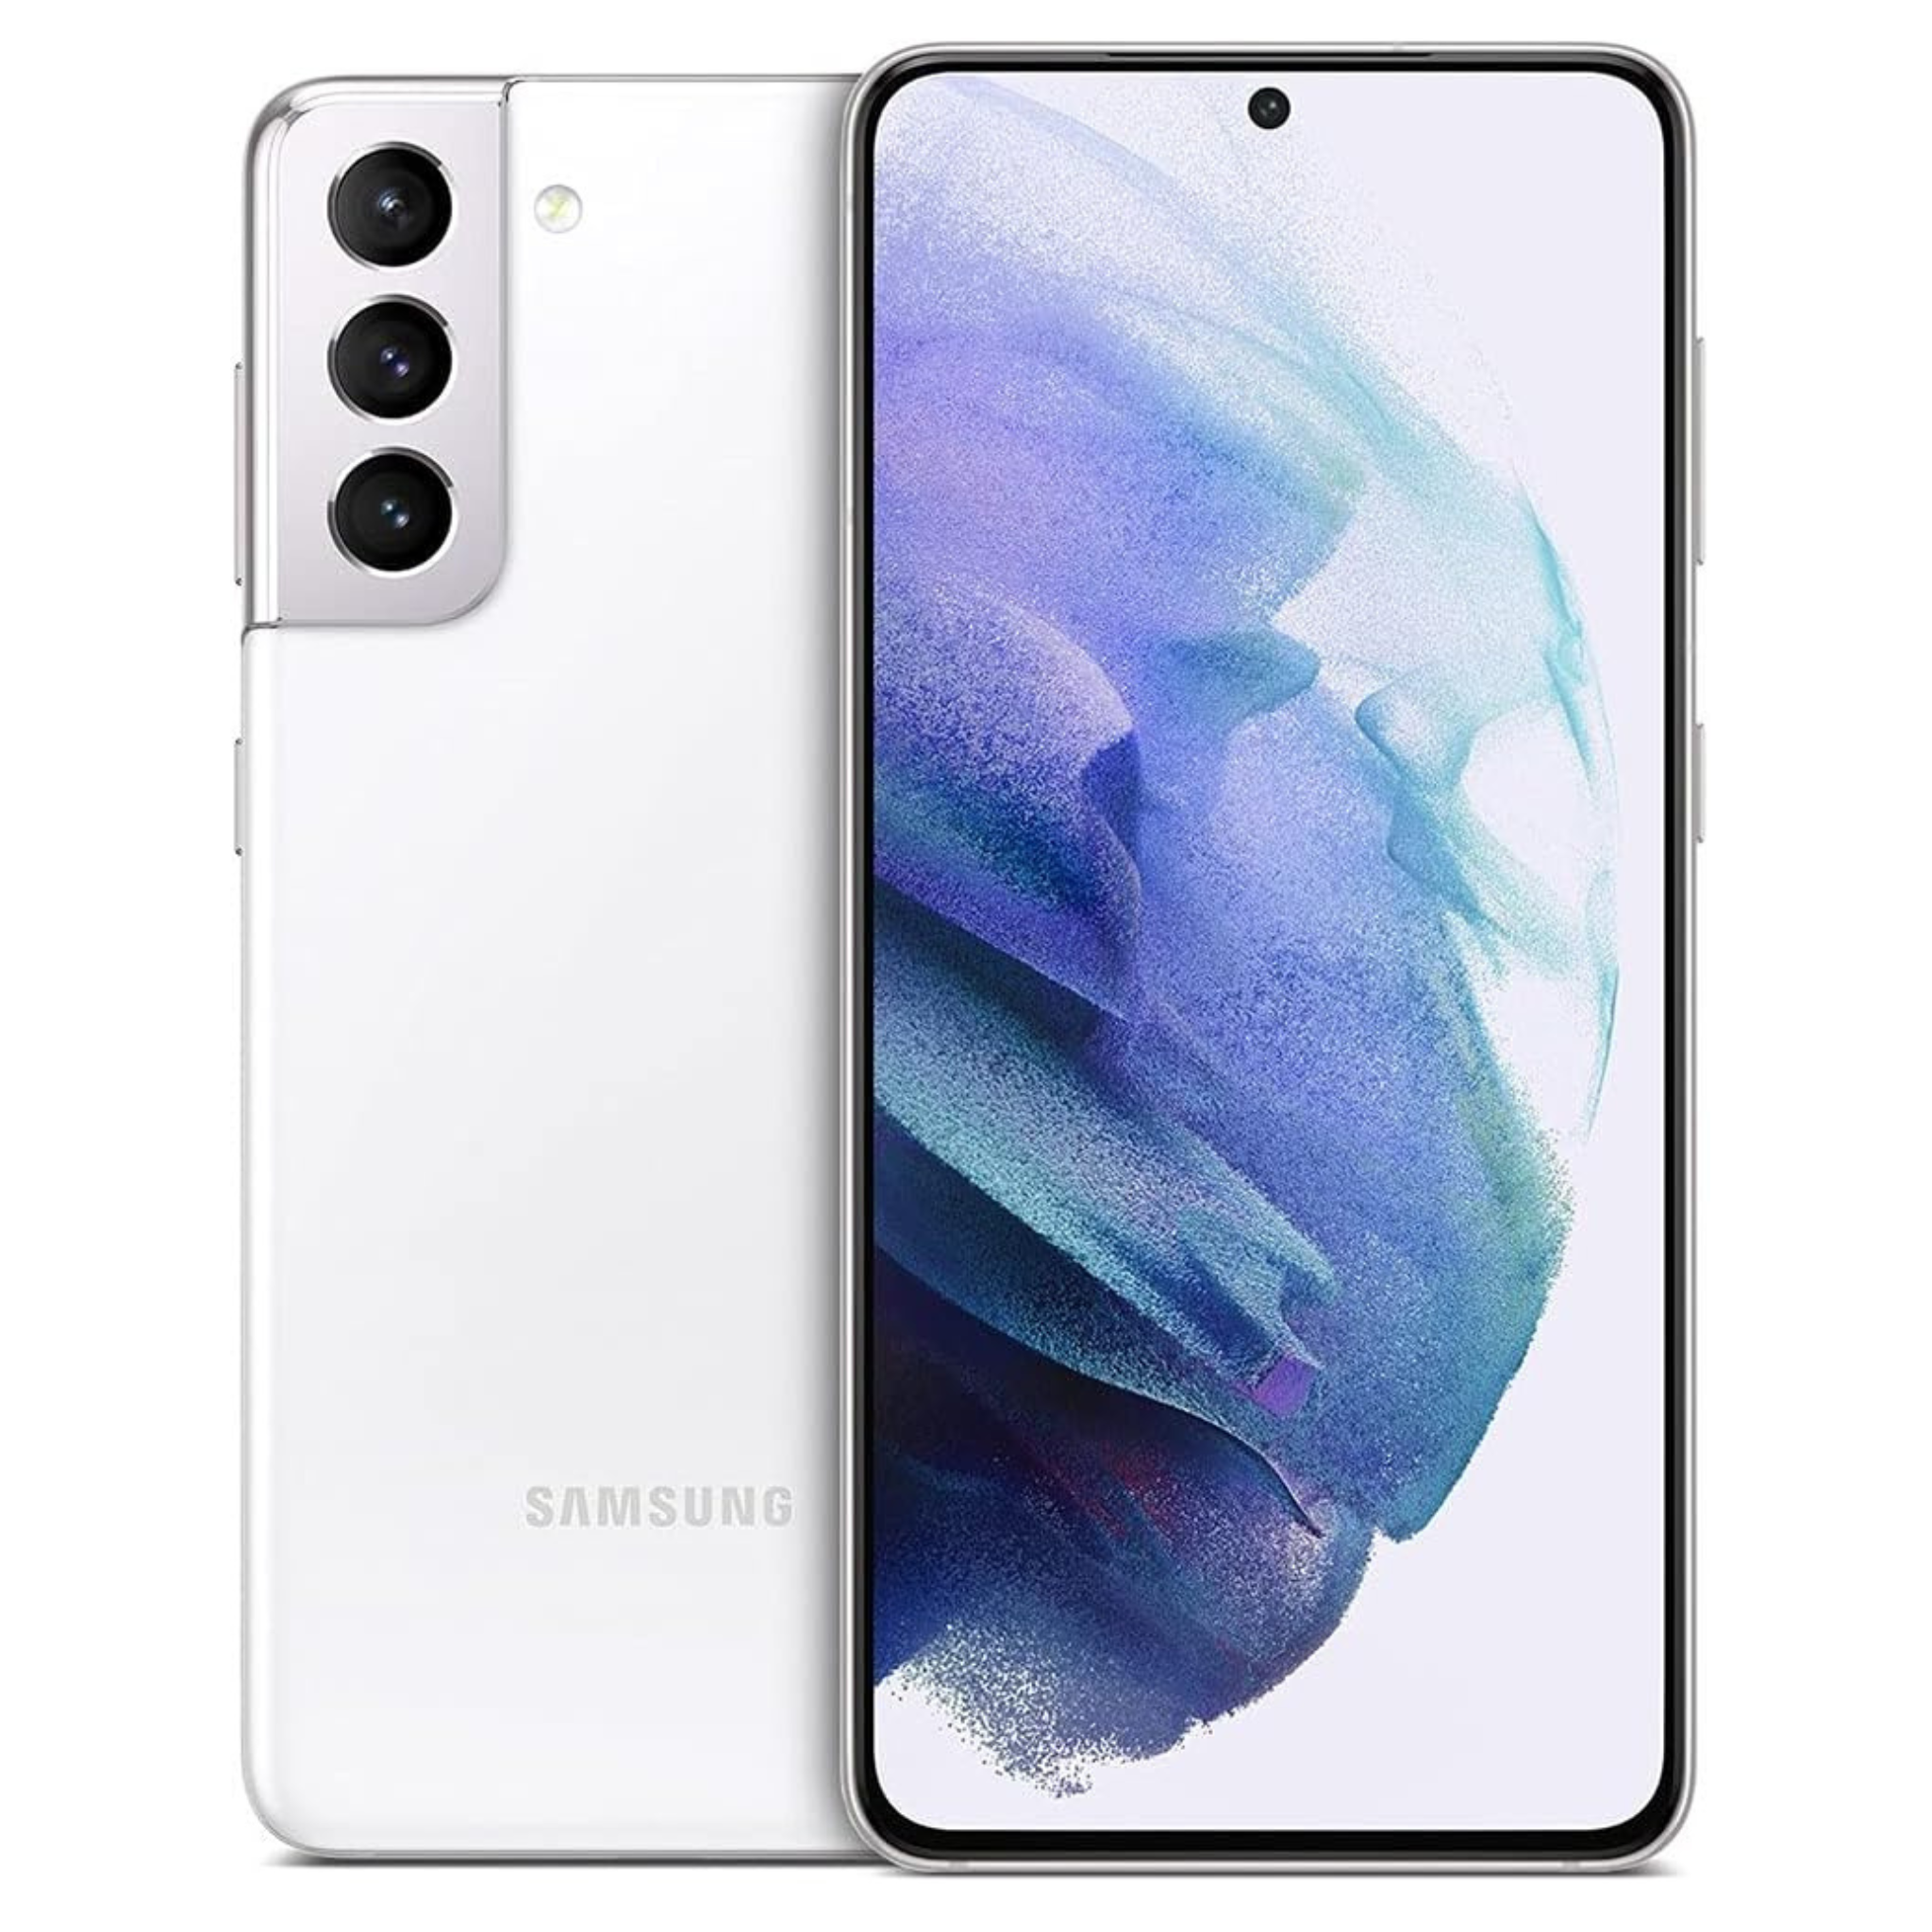 Samsung Galaxy S21 6.2" 128GB 5G Unlocked Smartphone